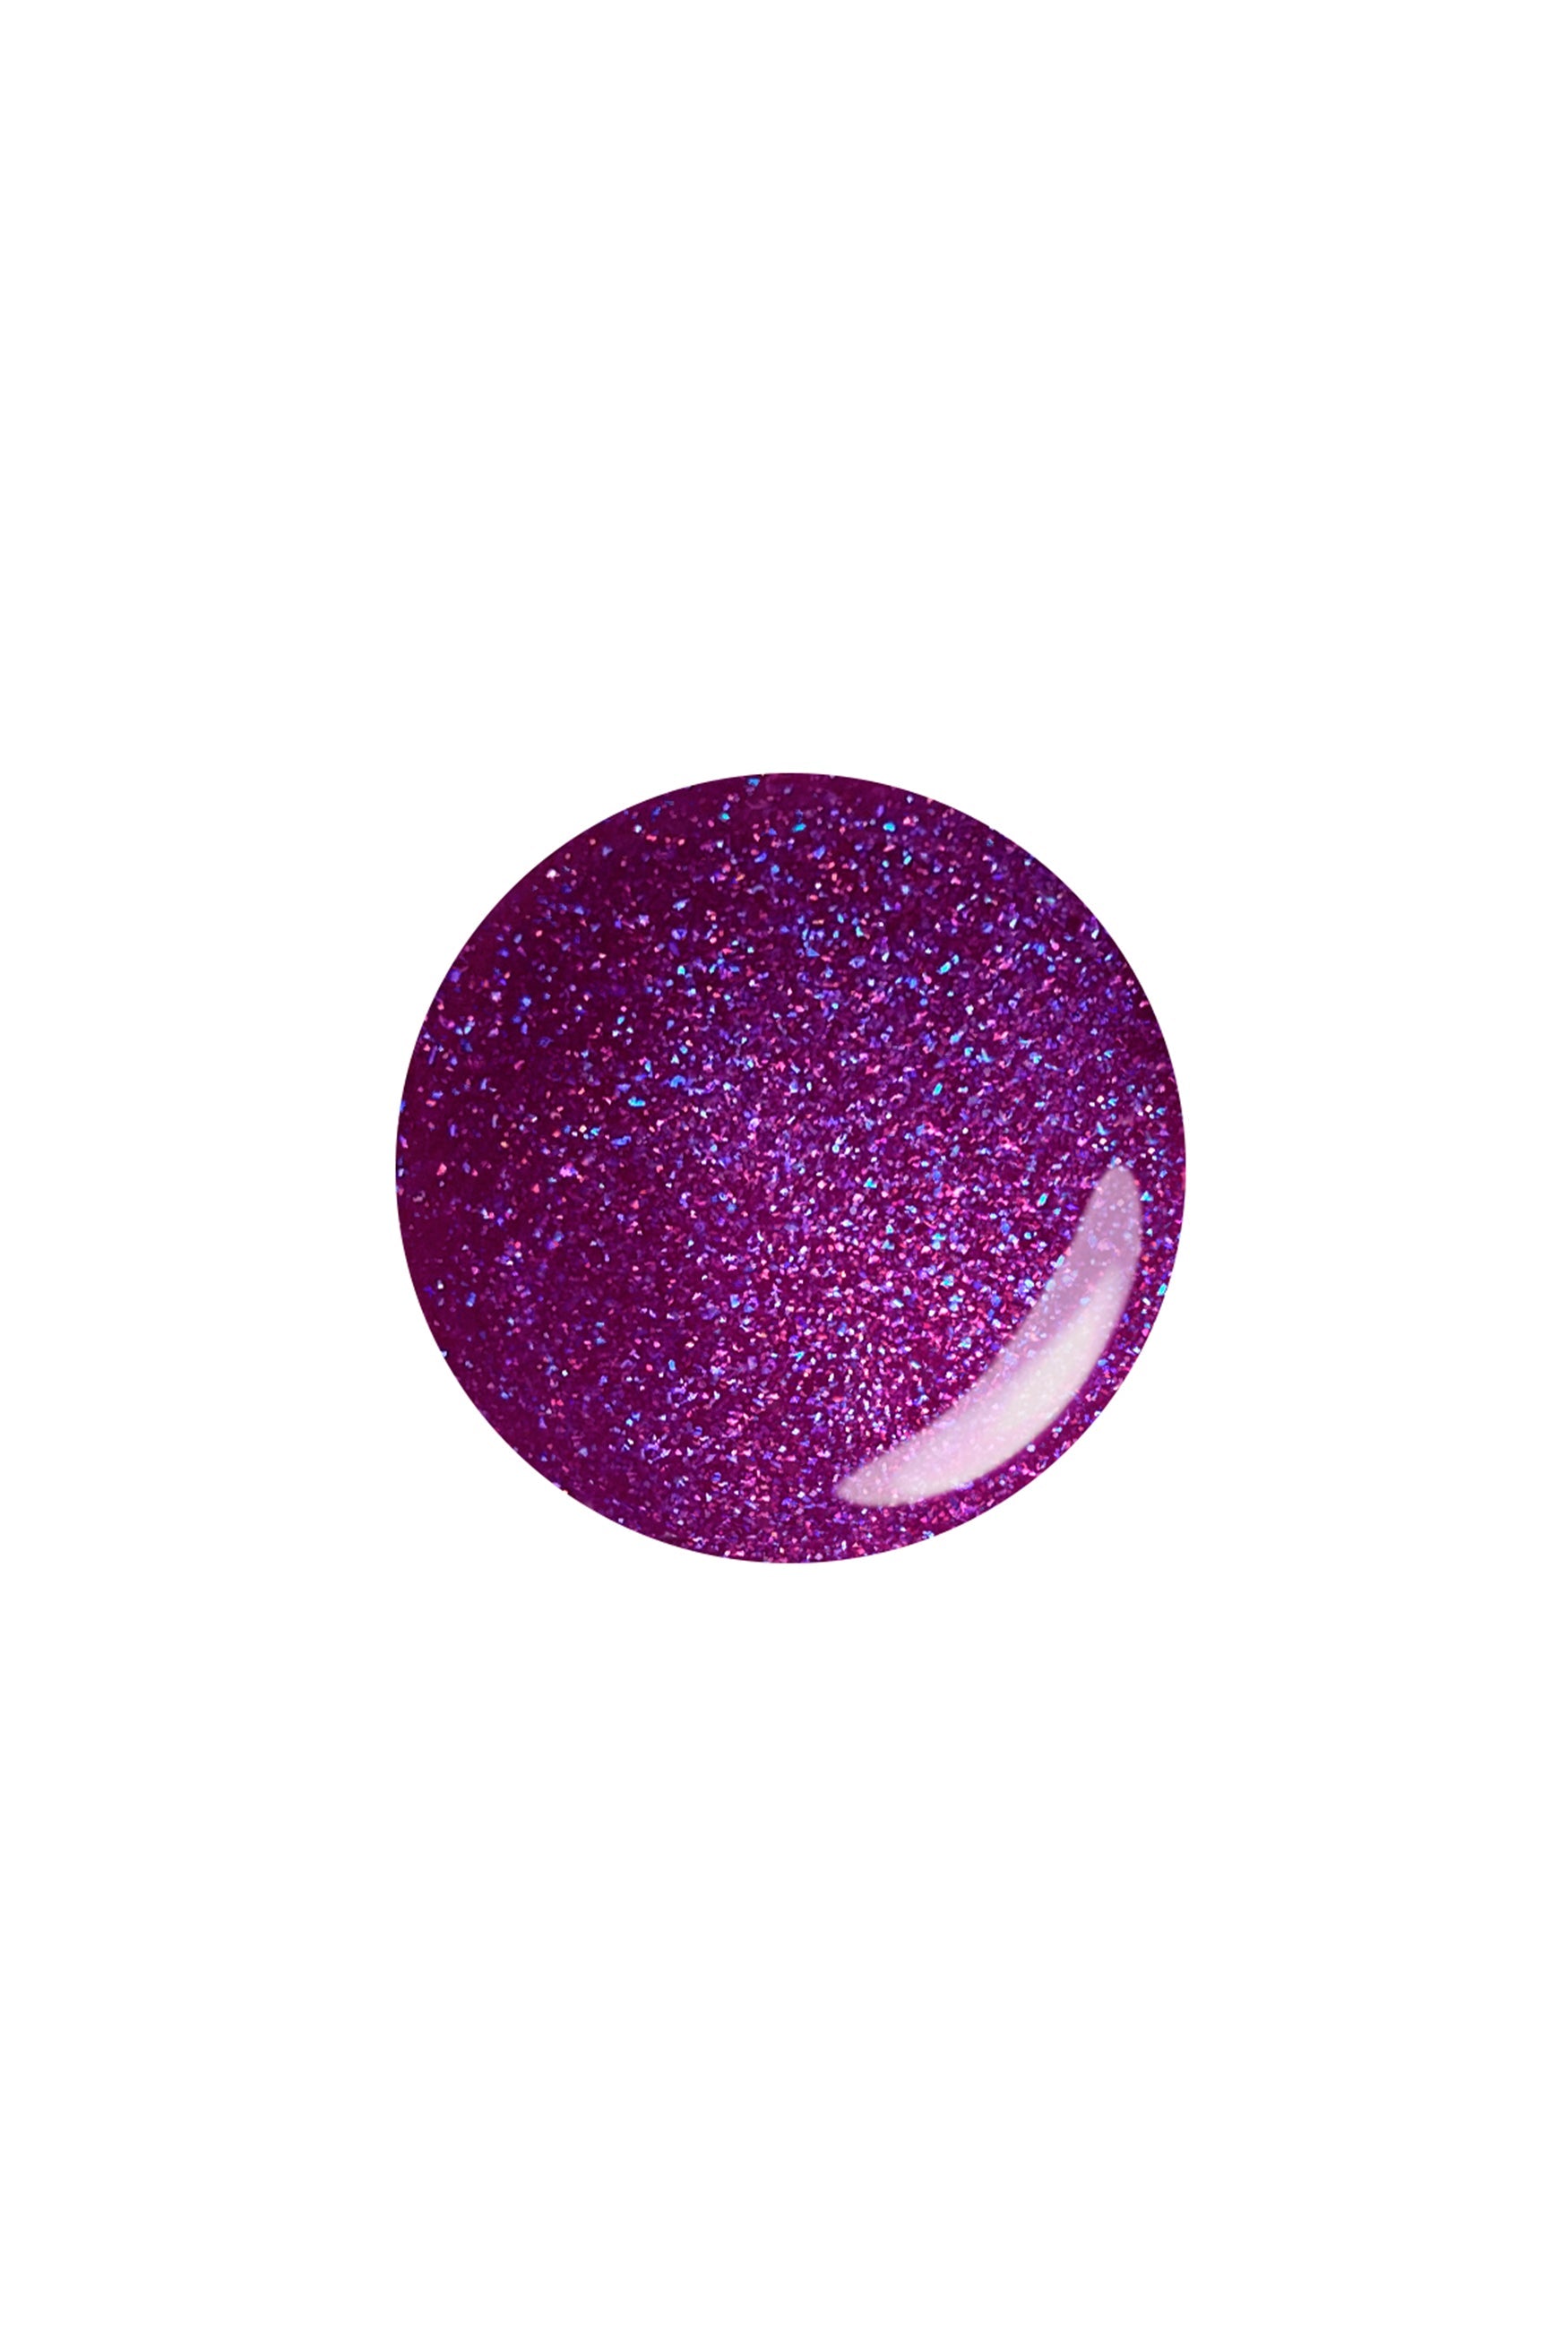 MYSTIC PURPLE: a round button sample color